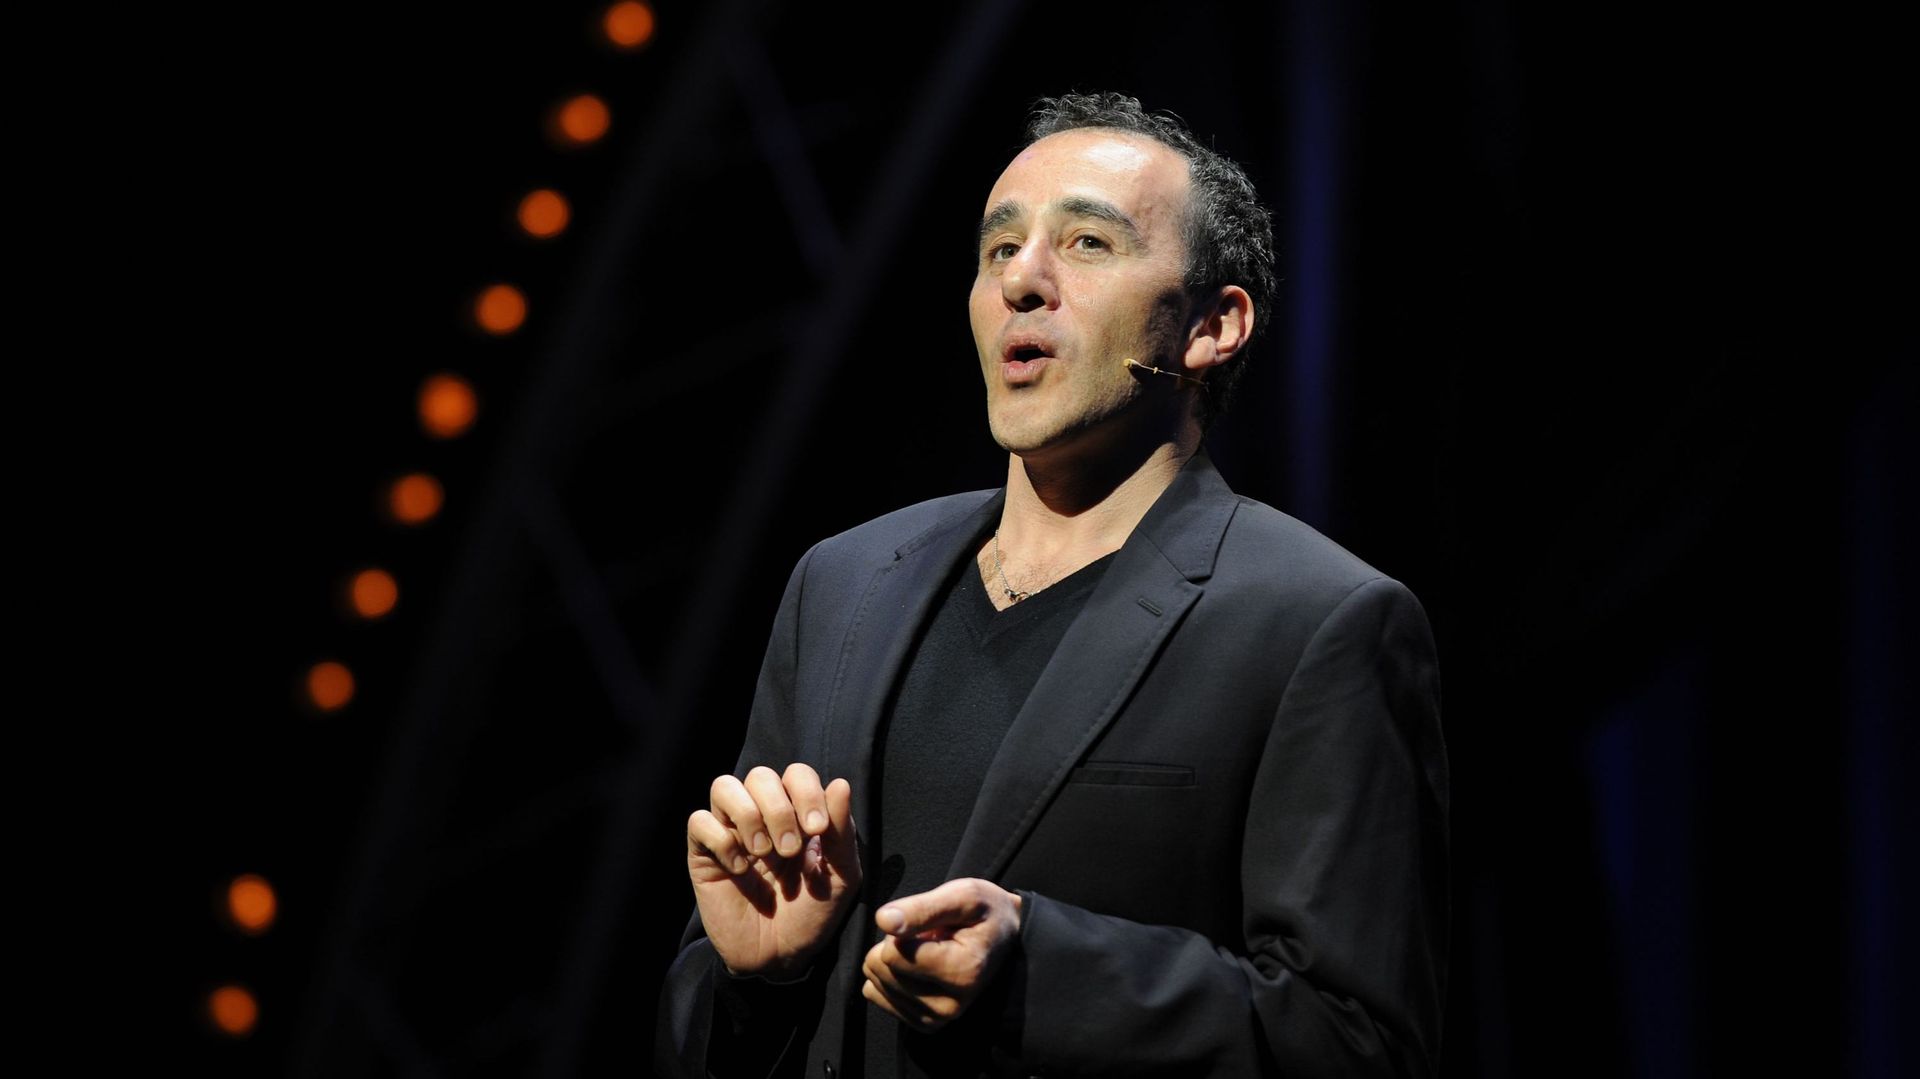 Elie Semoun on stage at Theatre du Leman in Geneva, Switzerland on April 16th, 2009.